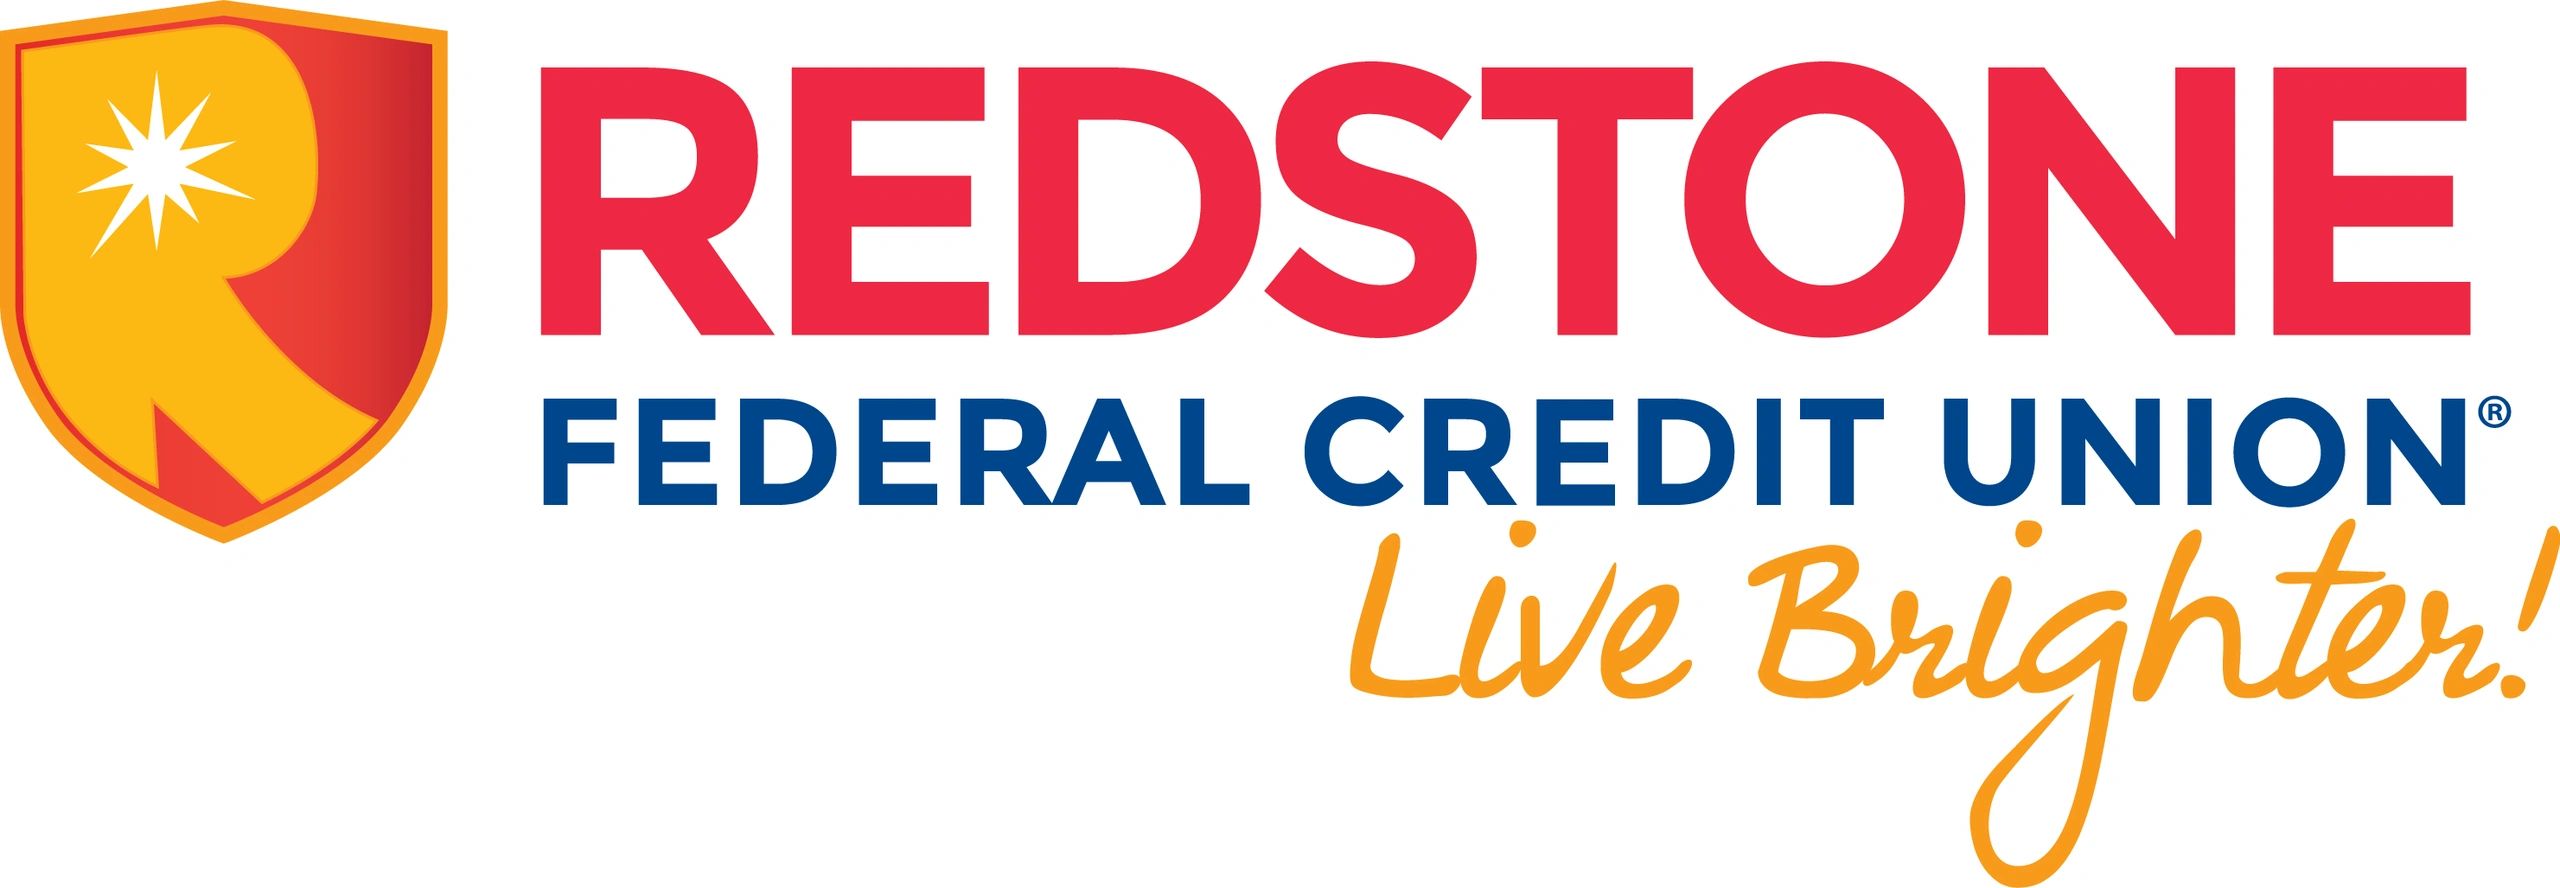 Redstone Federal Credit Union - Live Brighter Logo